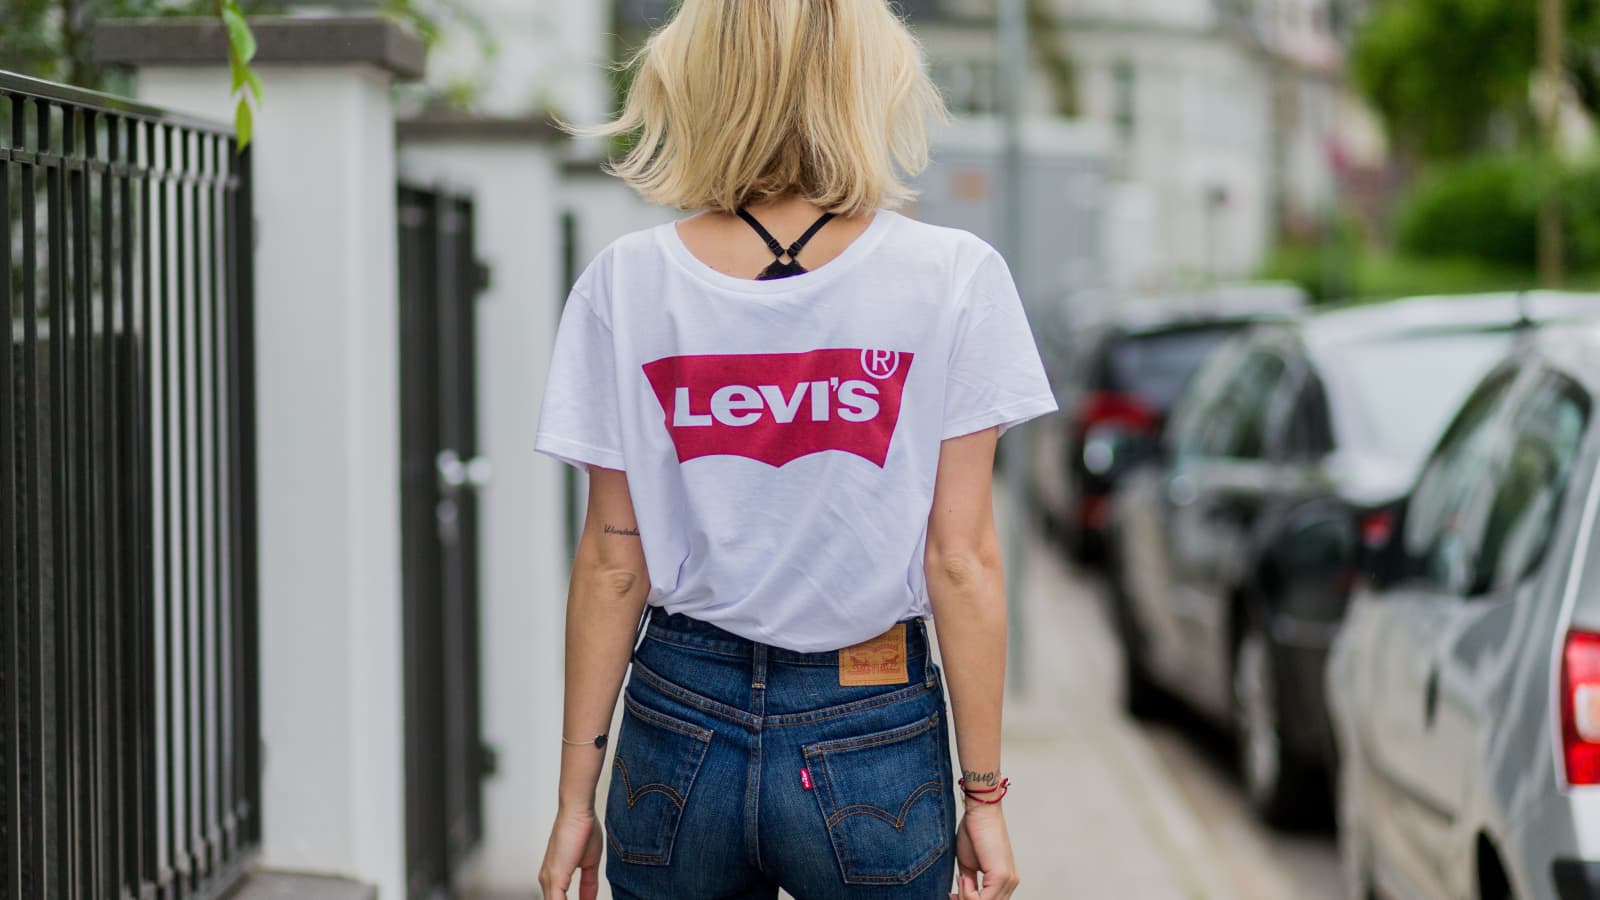 Why Levi Strauss, the world's biggest denim brand, is going public